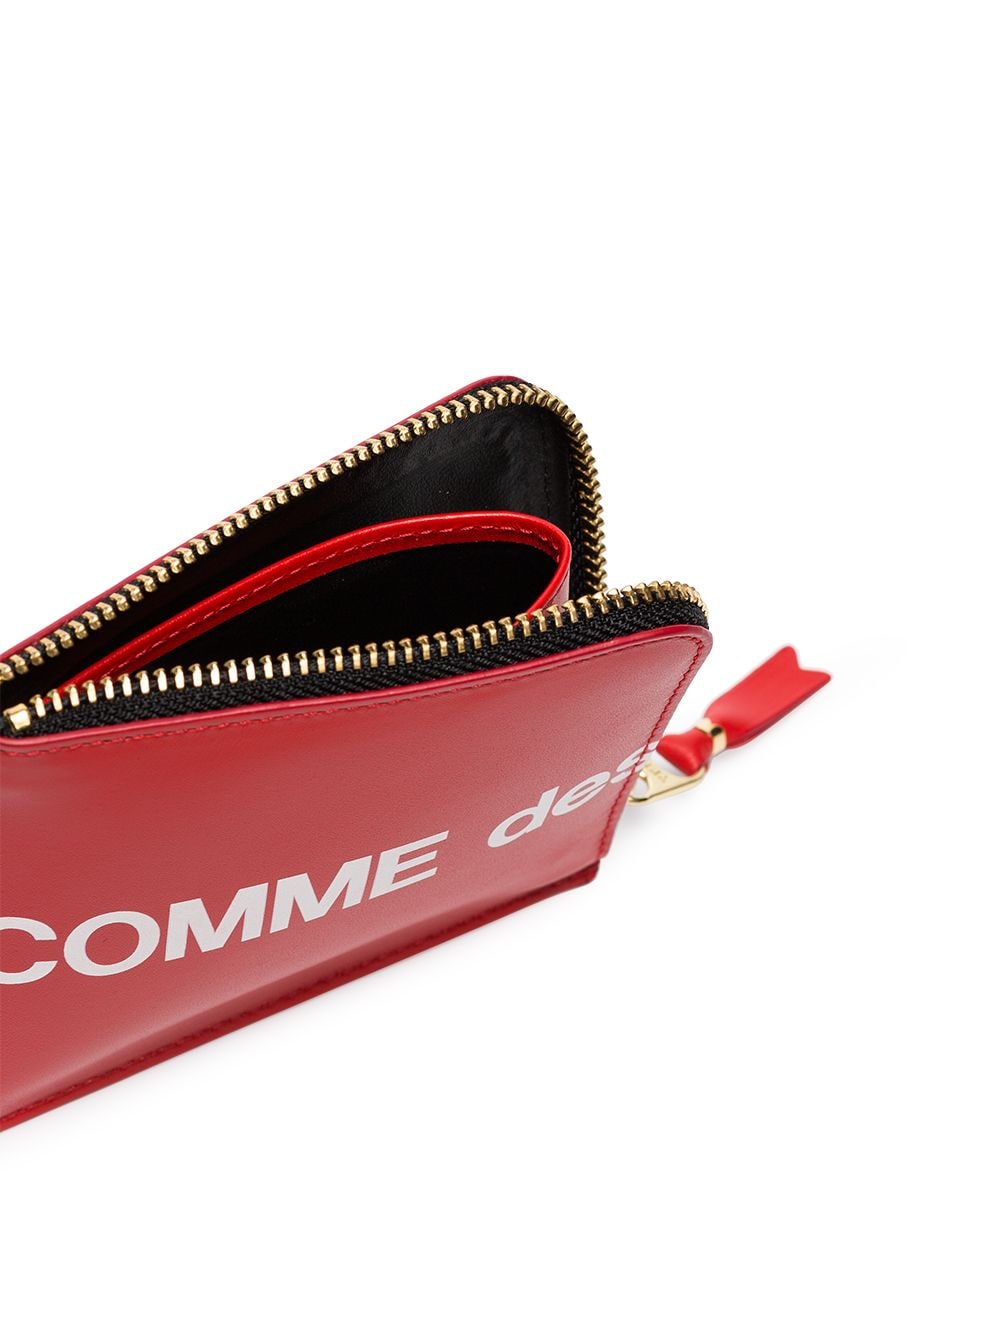 Red logo-print leather wallet<BR/><BR/><BR/>